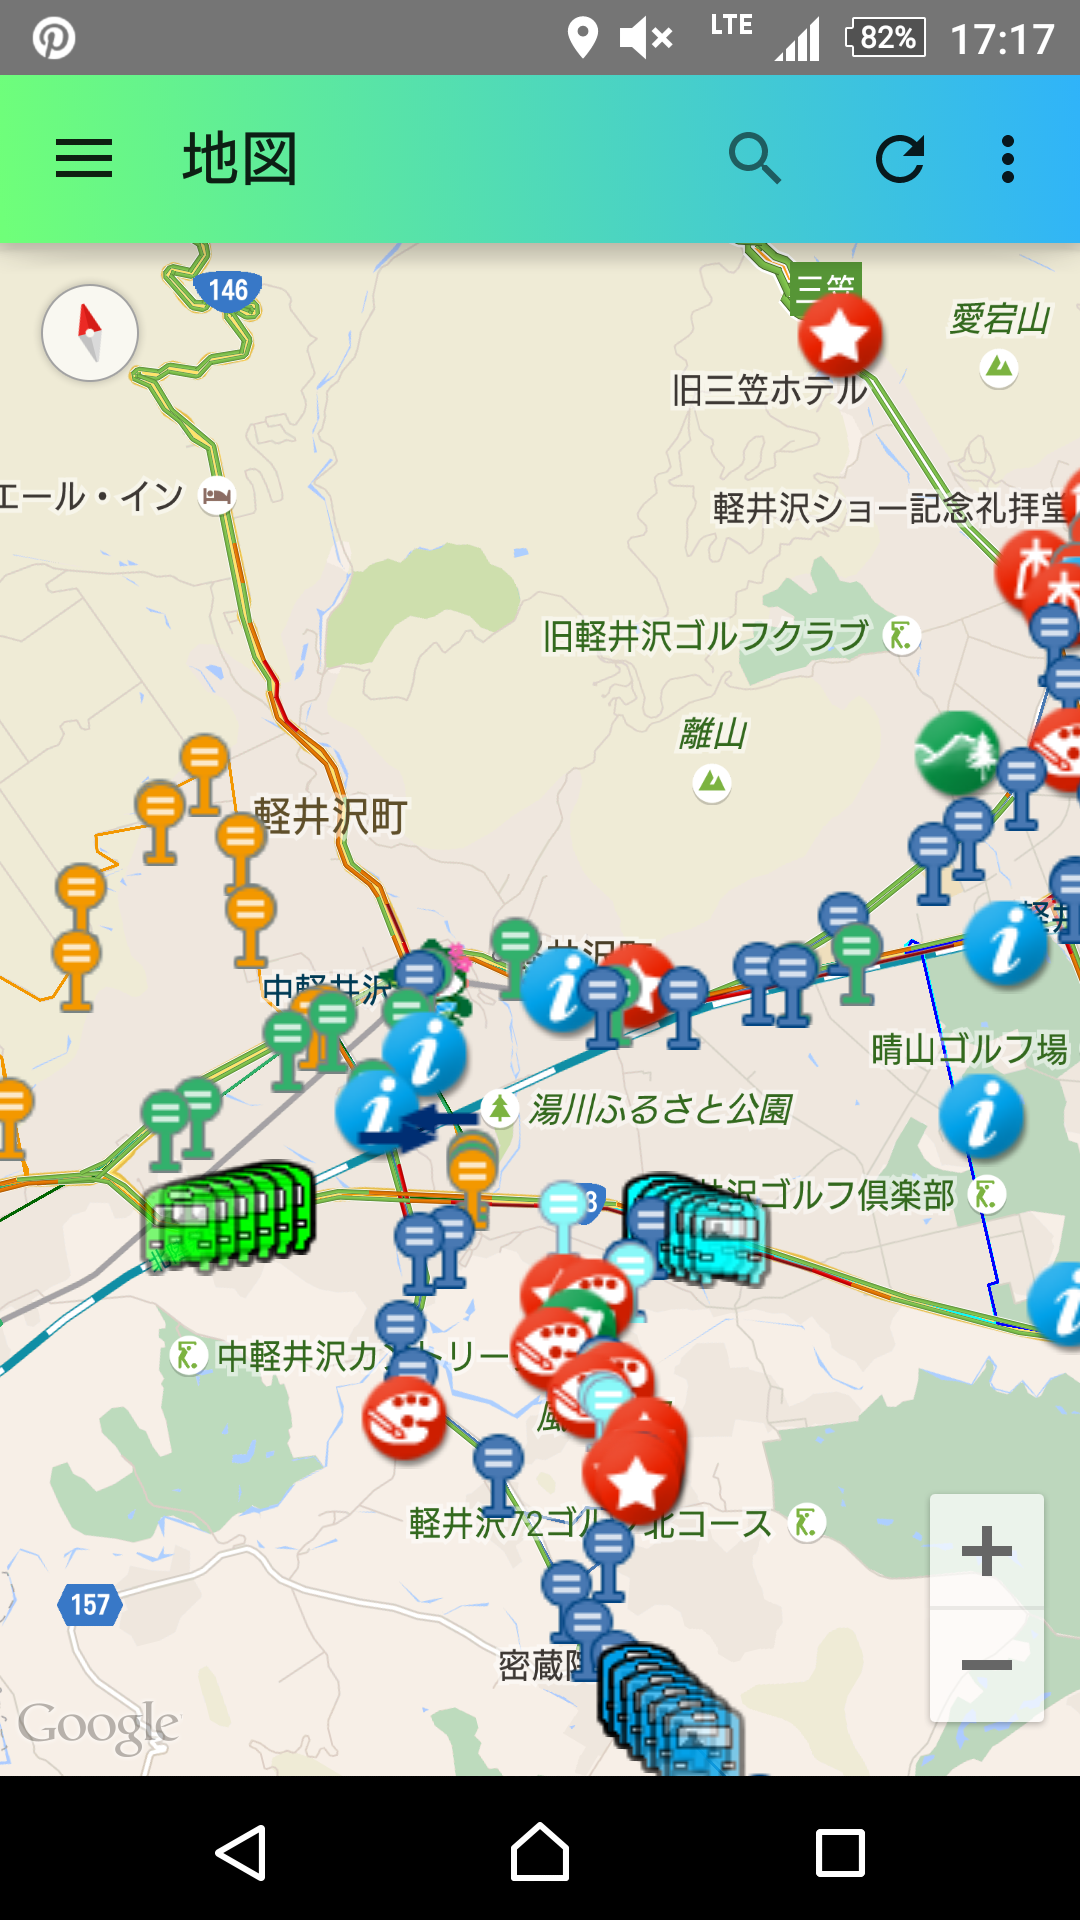 http://hayashida.jp/o/Screenshot_2015-08-12-17-17-57.png